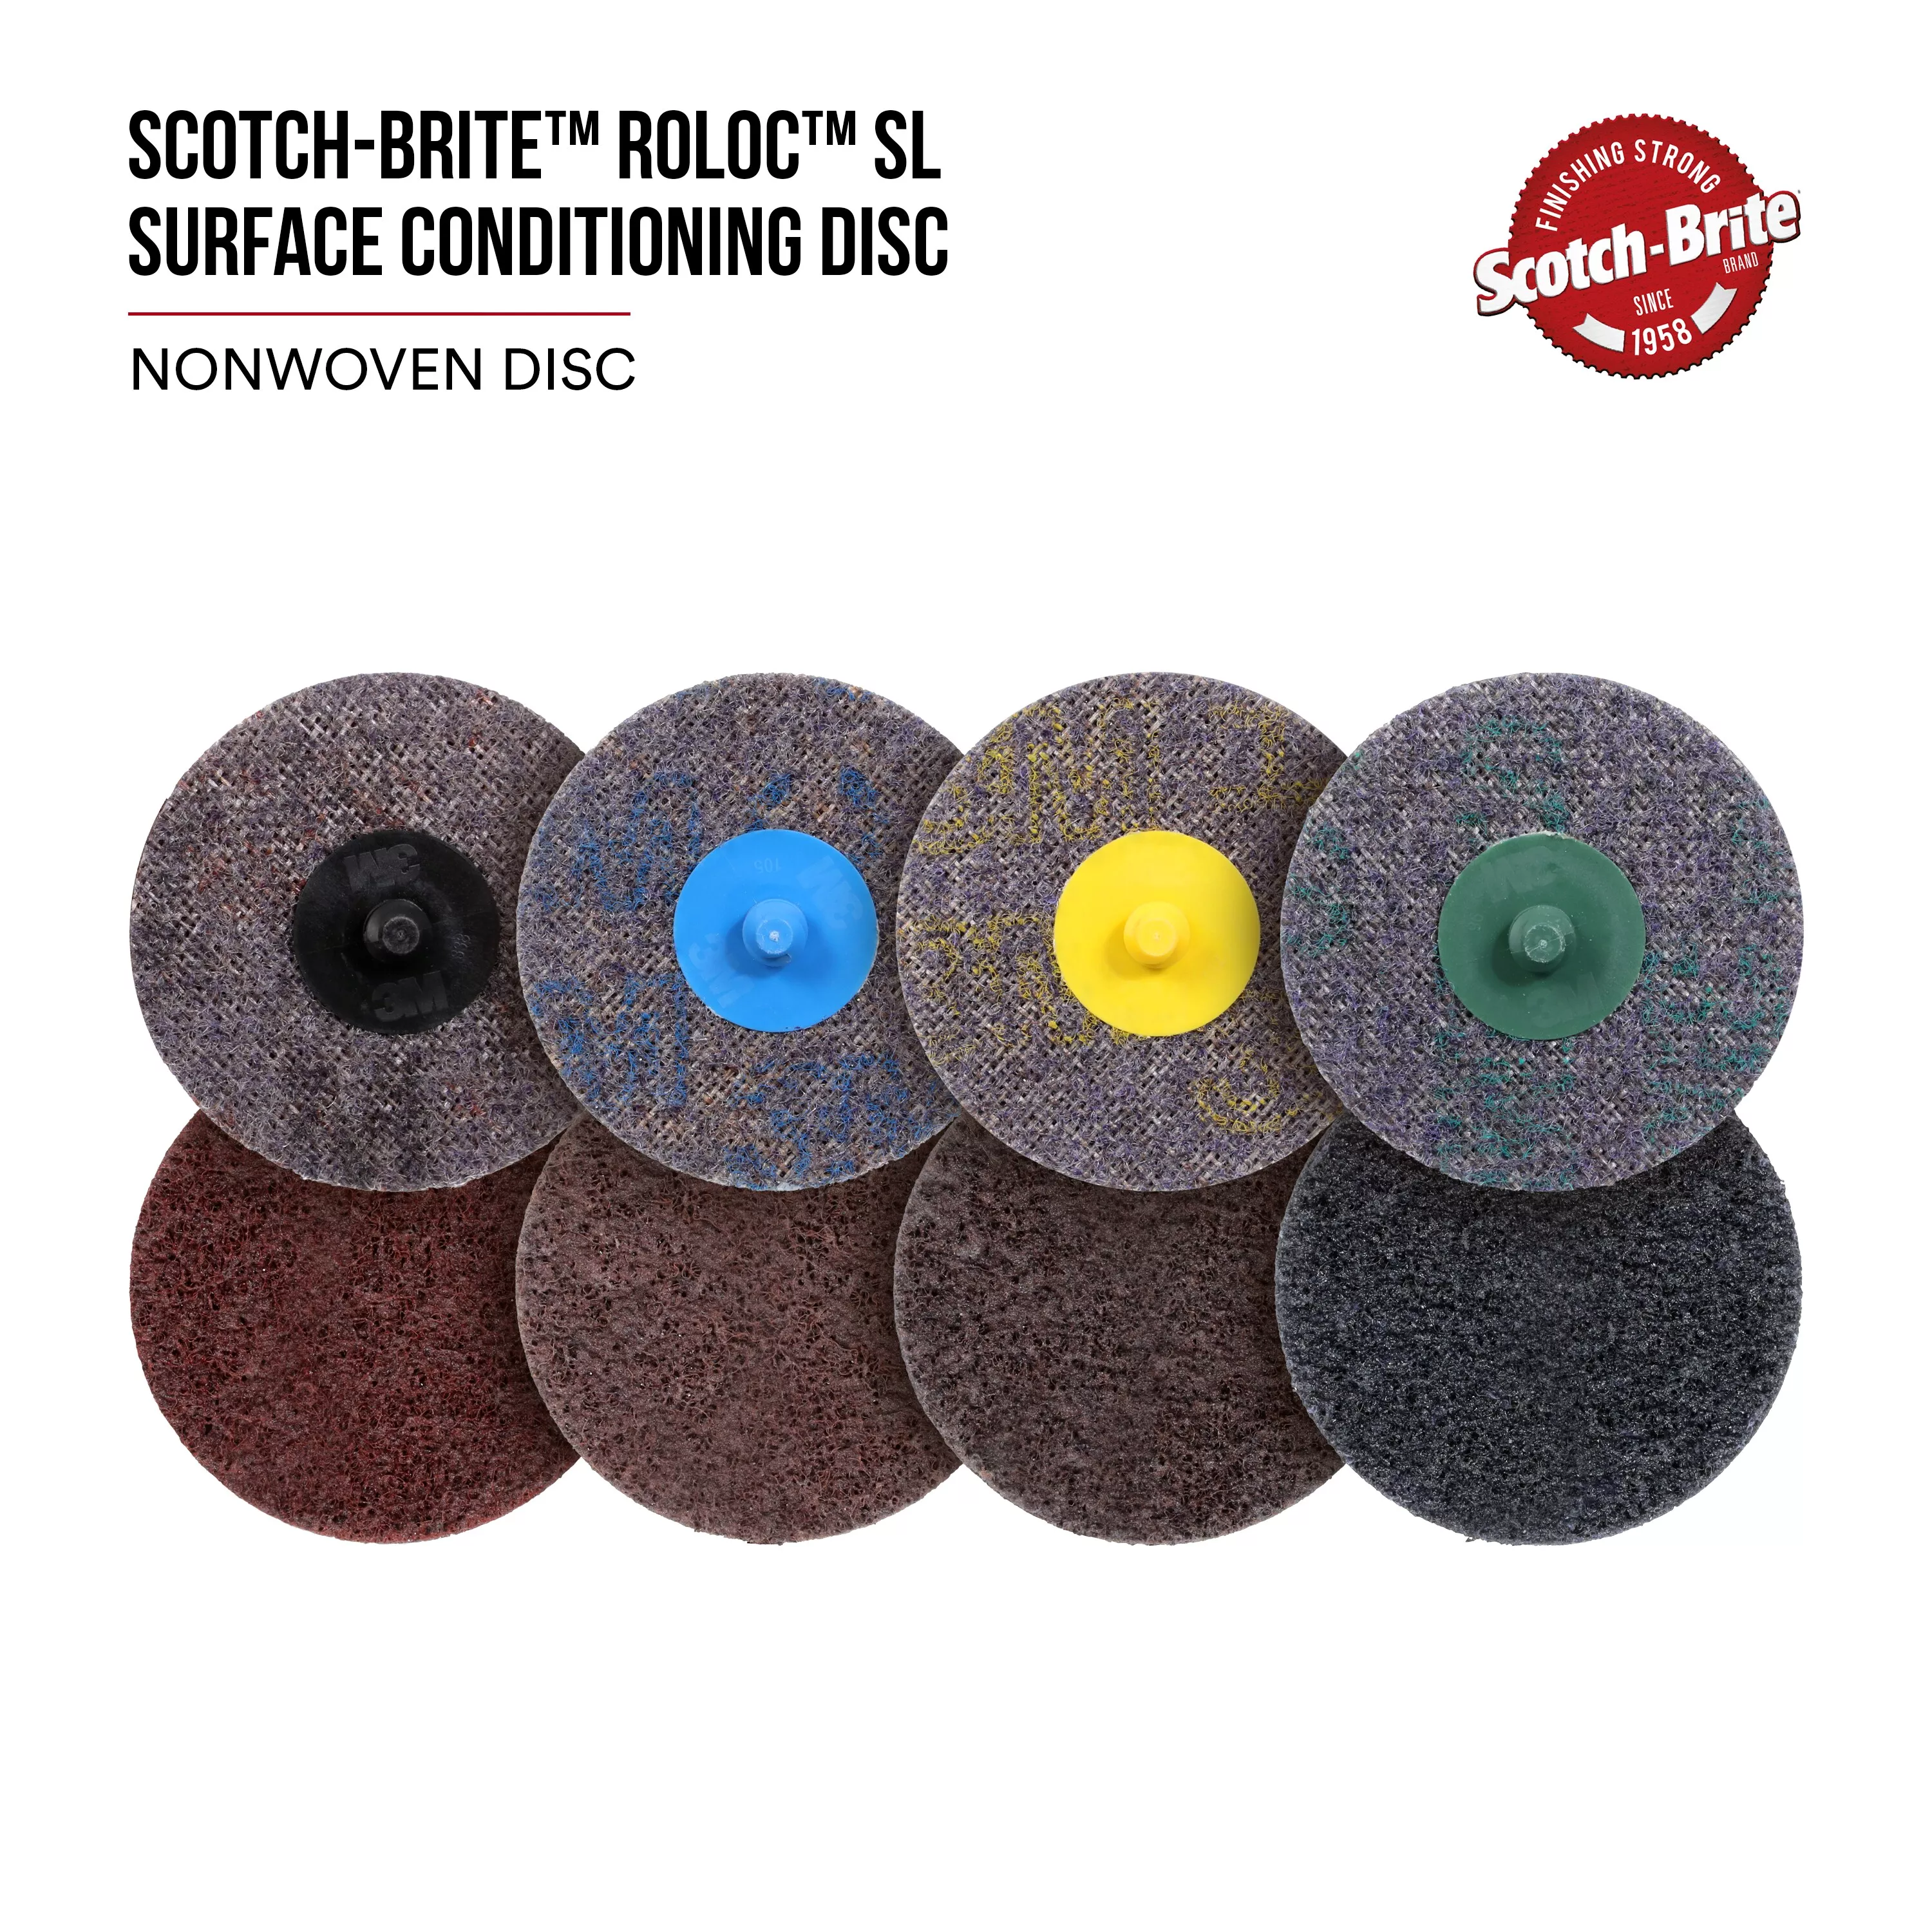 SKU 7000121085 | Scotch-Brite™ Roloc™ SL Surface Conditioning Disc